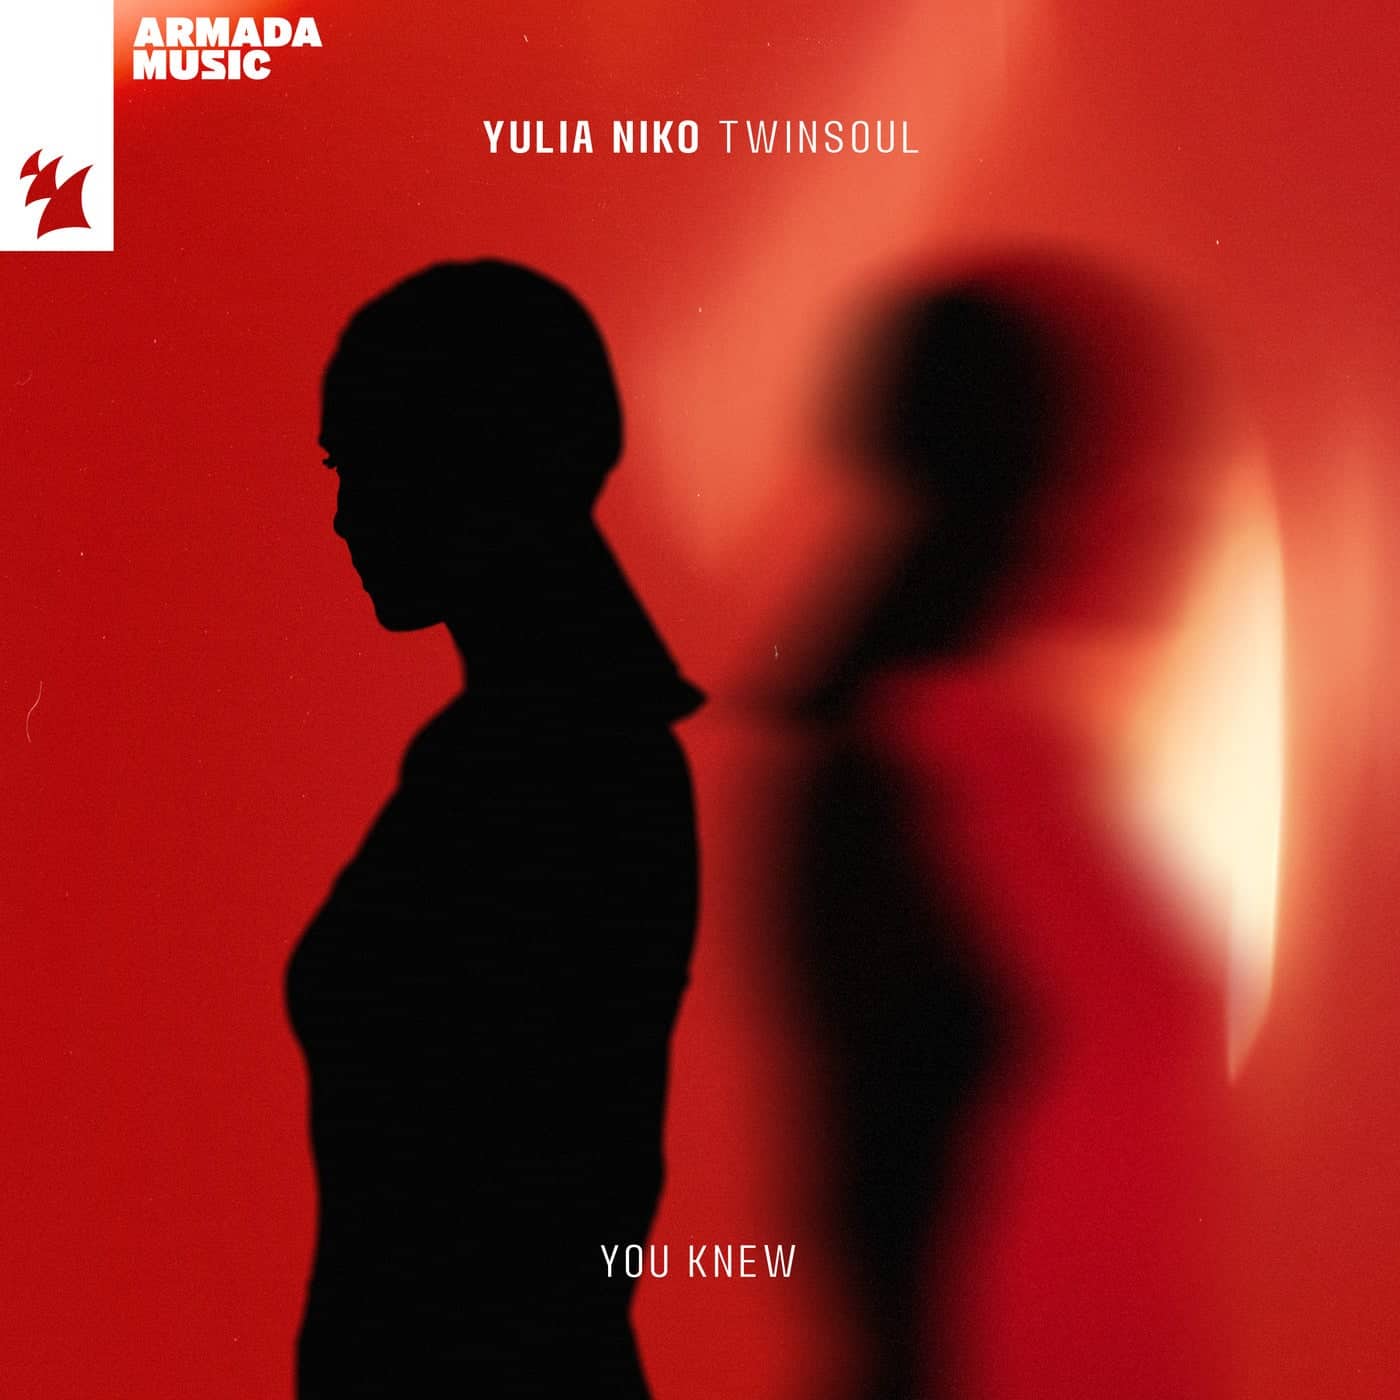 image cover: Yulia Niko - You Knew / Armada Music